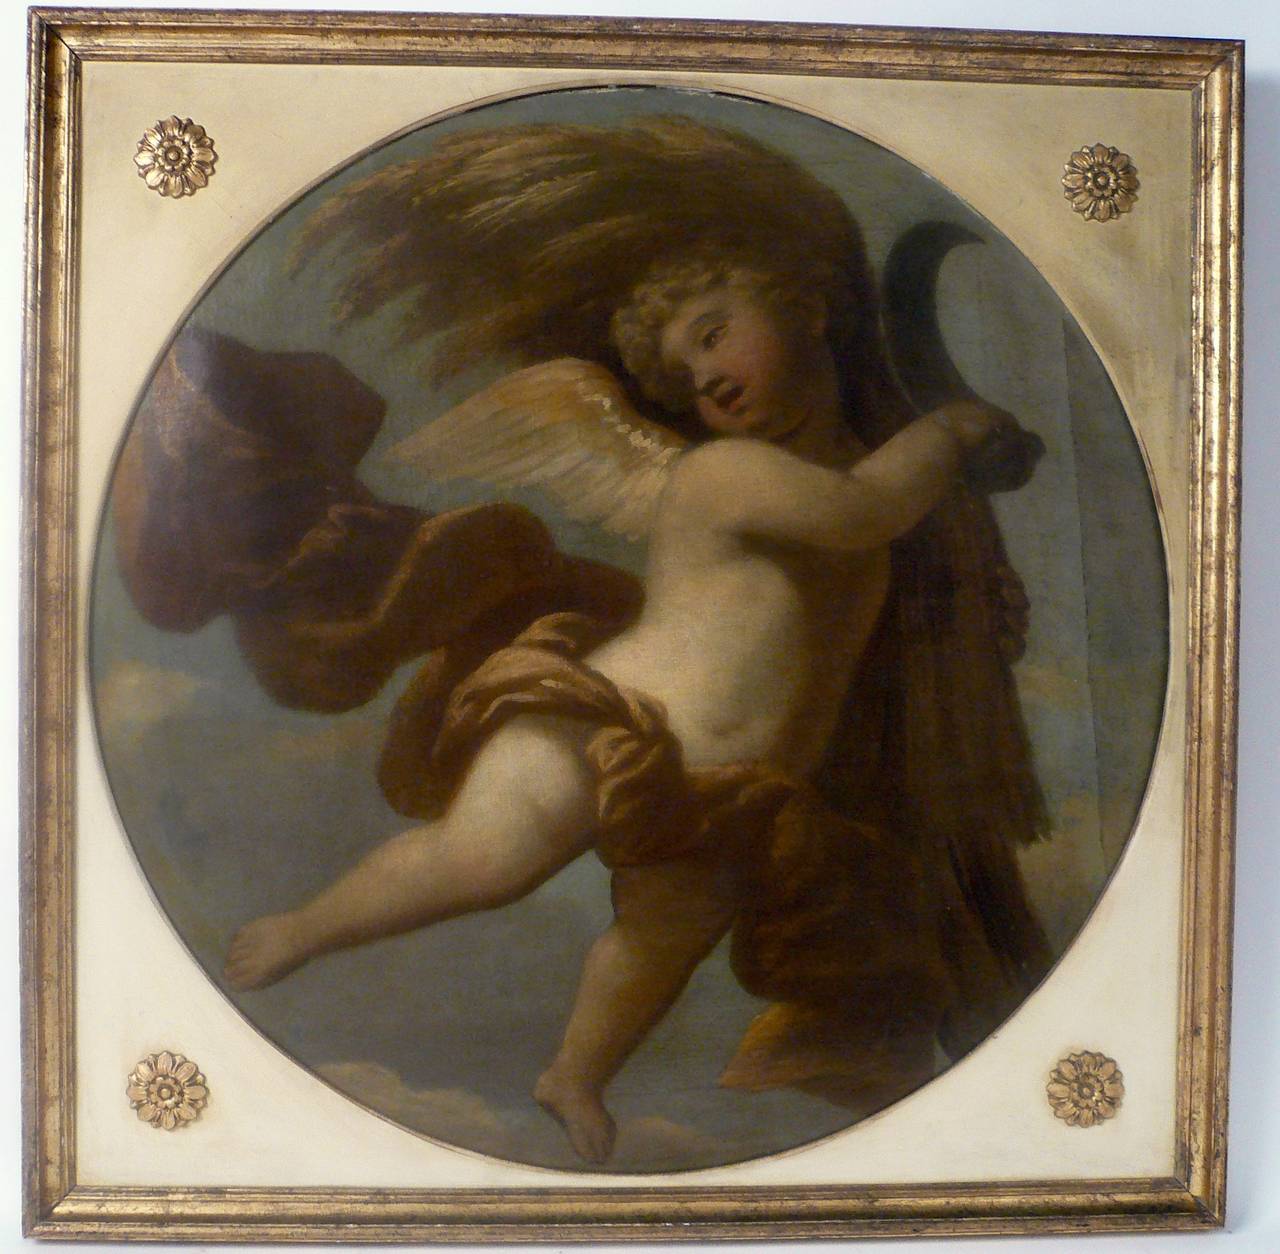 19th century allegorical paintings